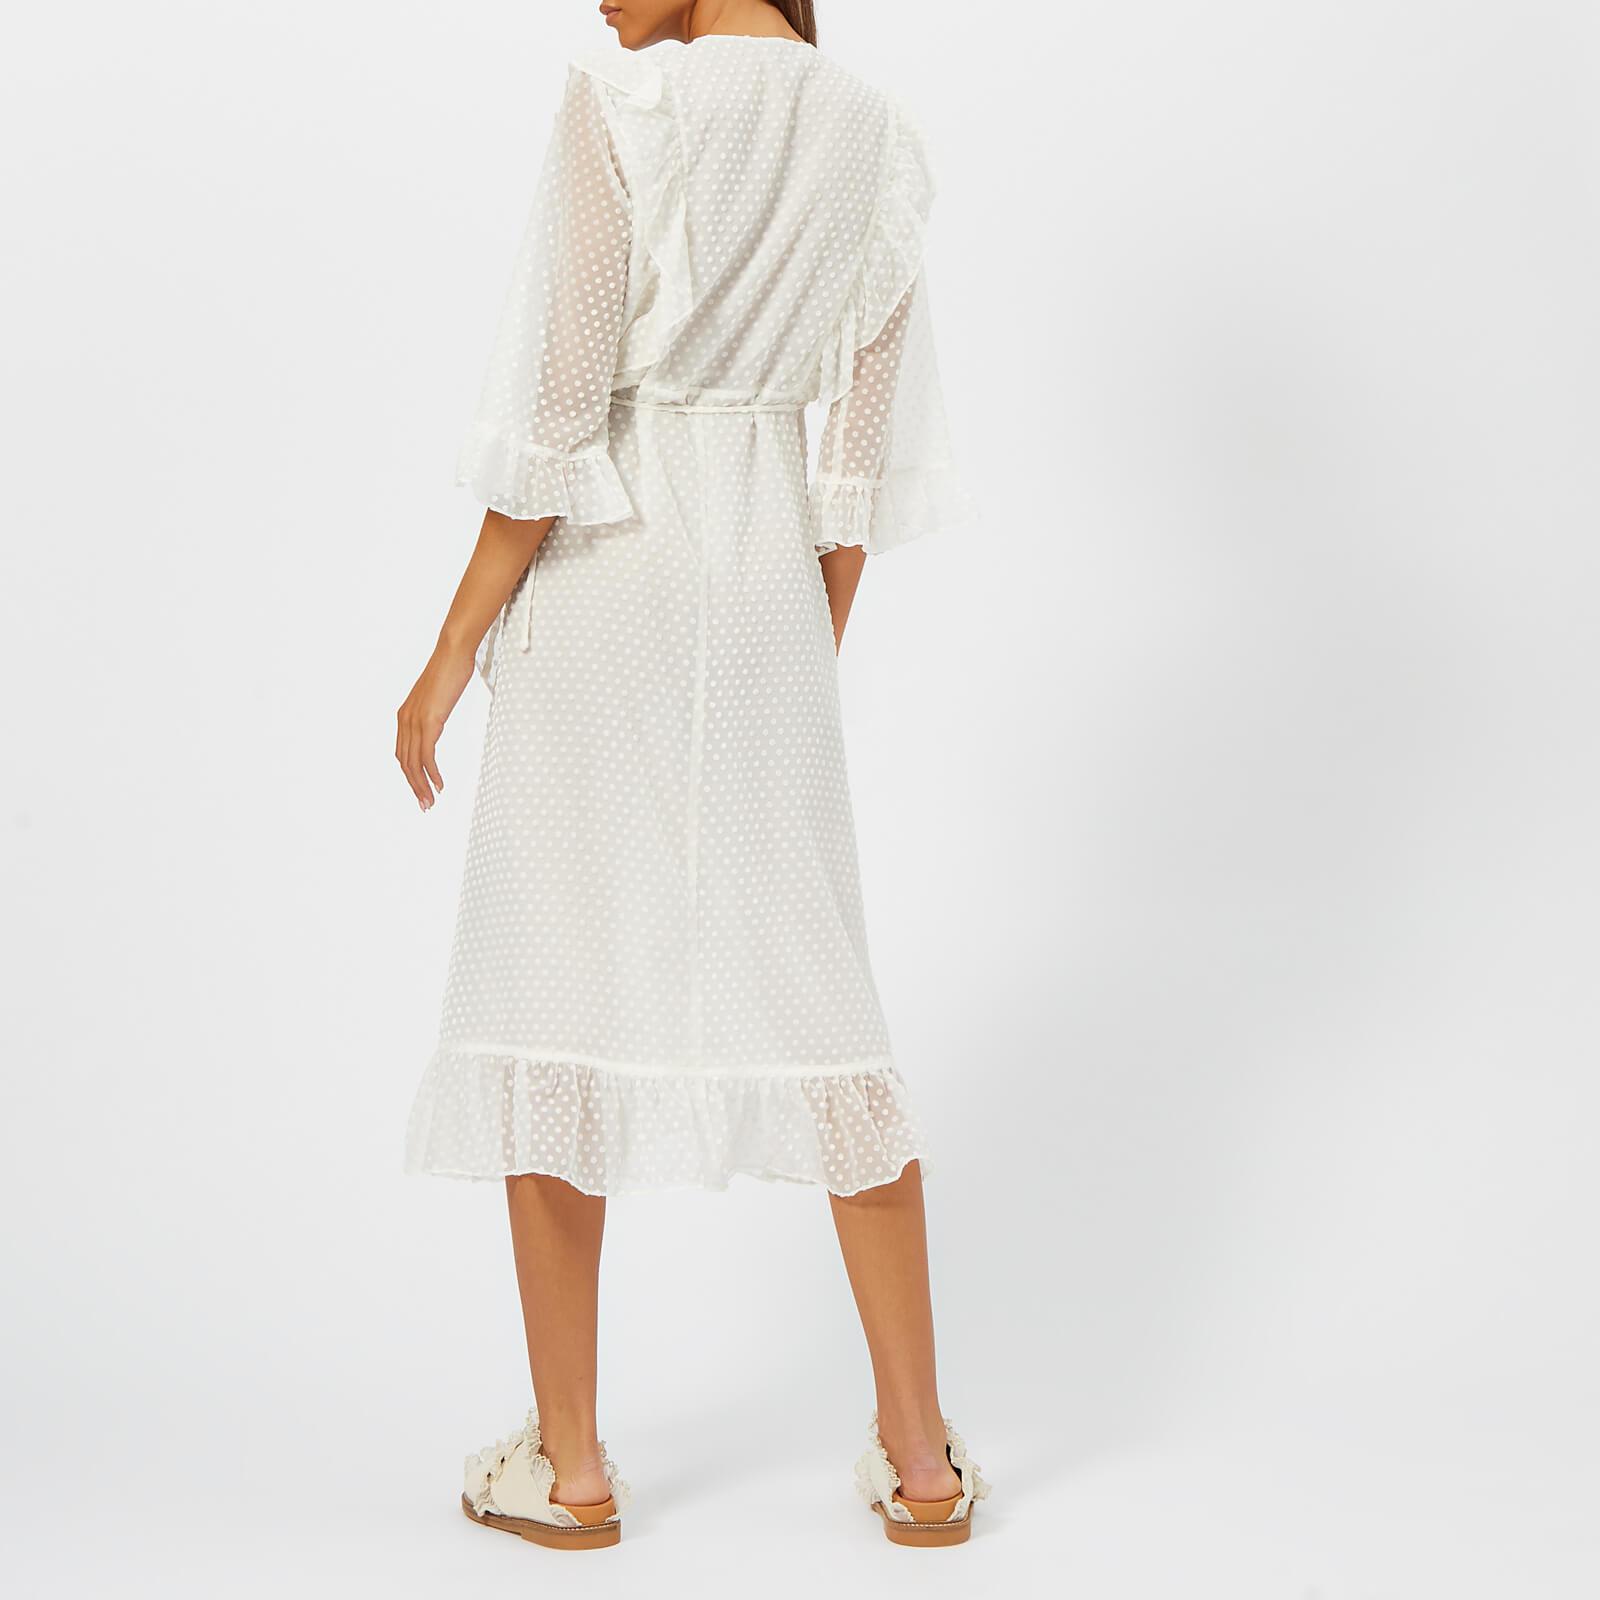 Ganni Synthetic Jasmine Dress in White - Lyst